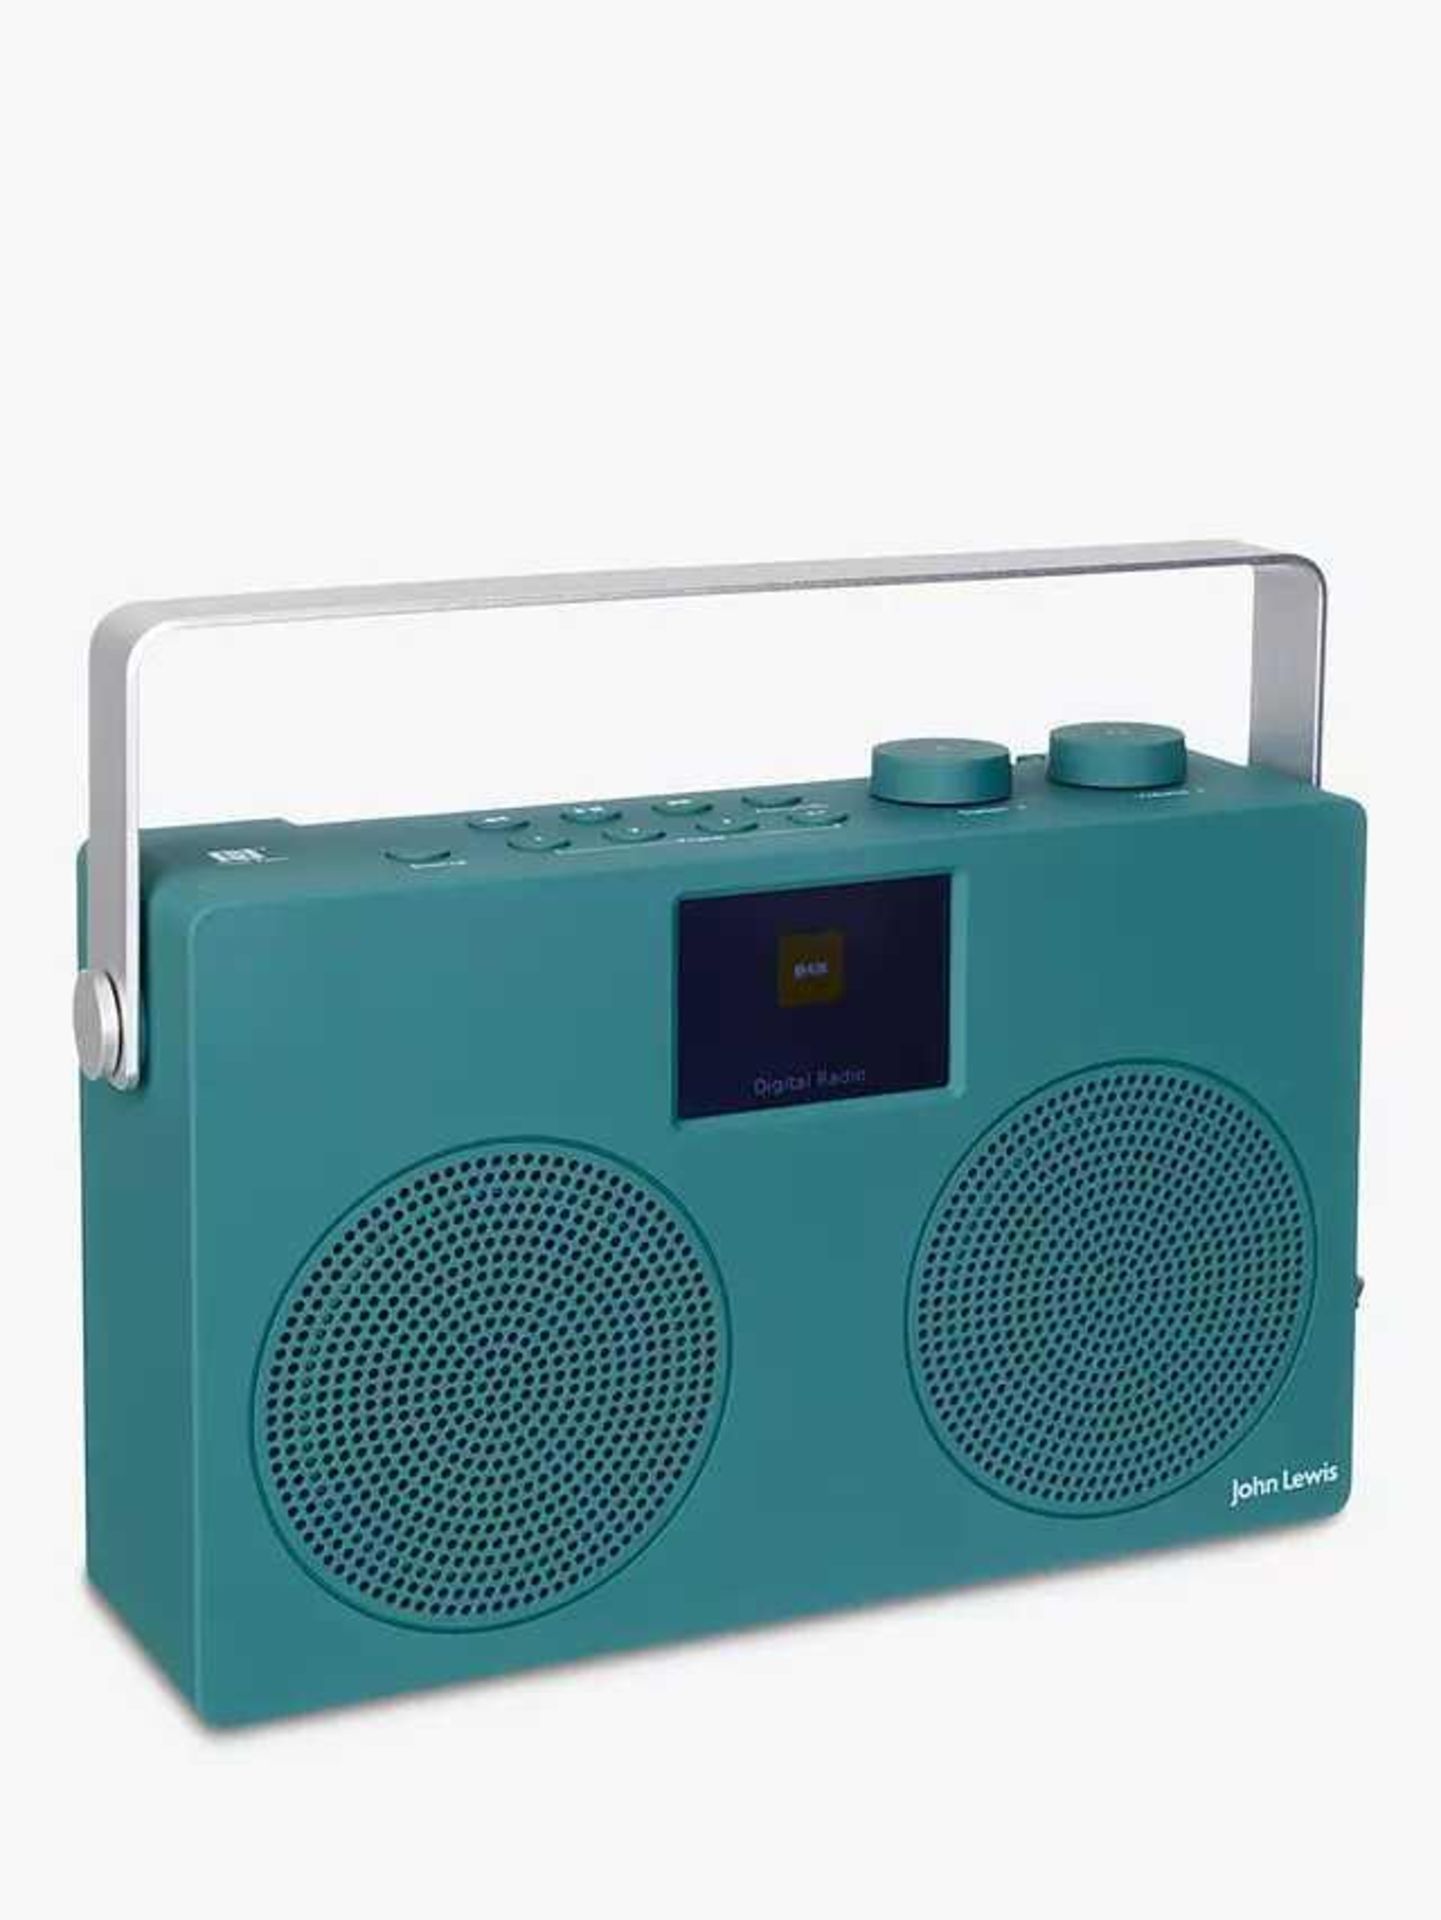 Rrp £70 Each Boxed John Lewis Spectrum Duo Dab And Fm Digital Radios - Image 4 of 4